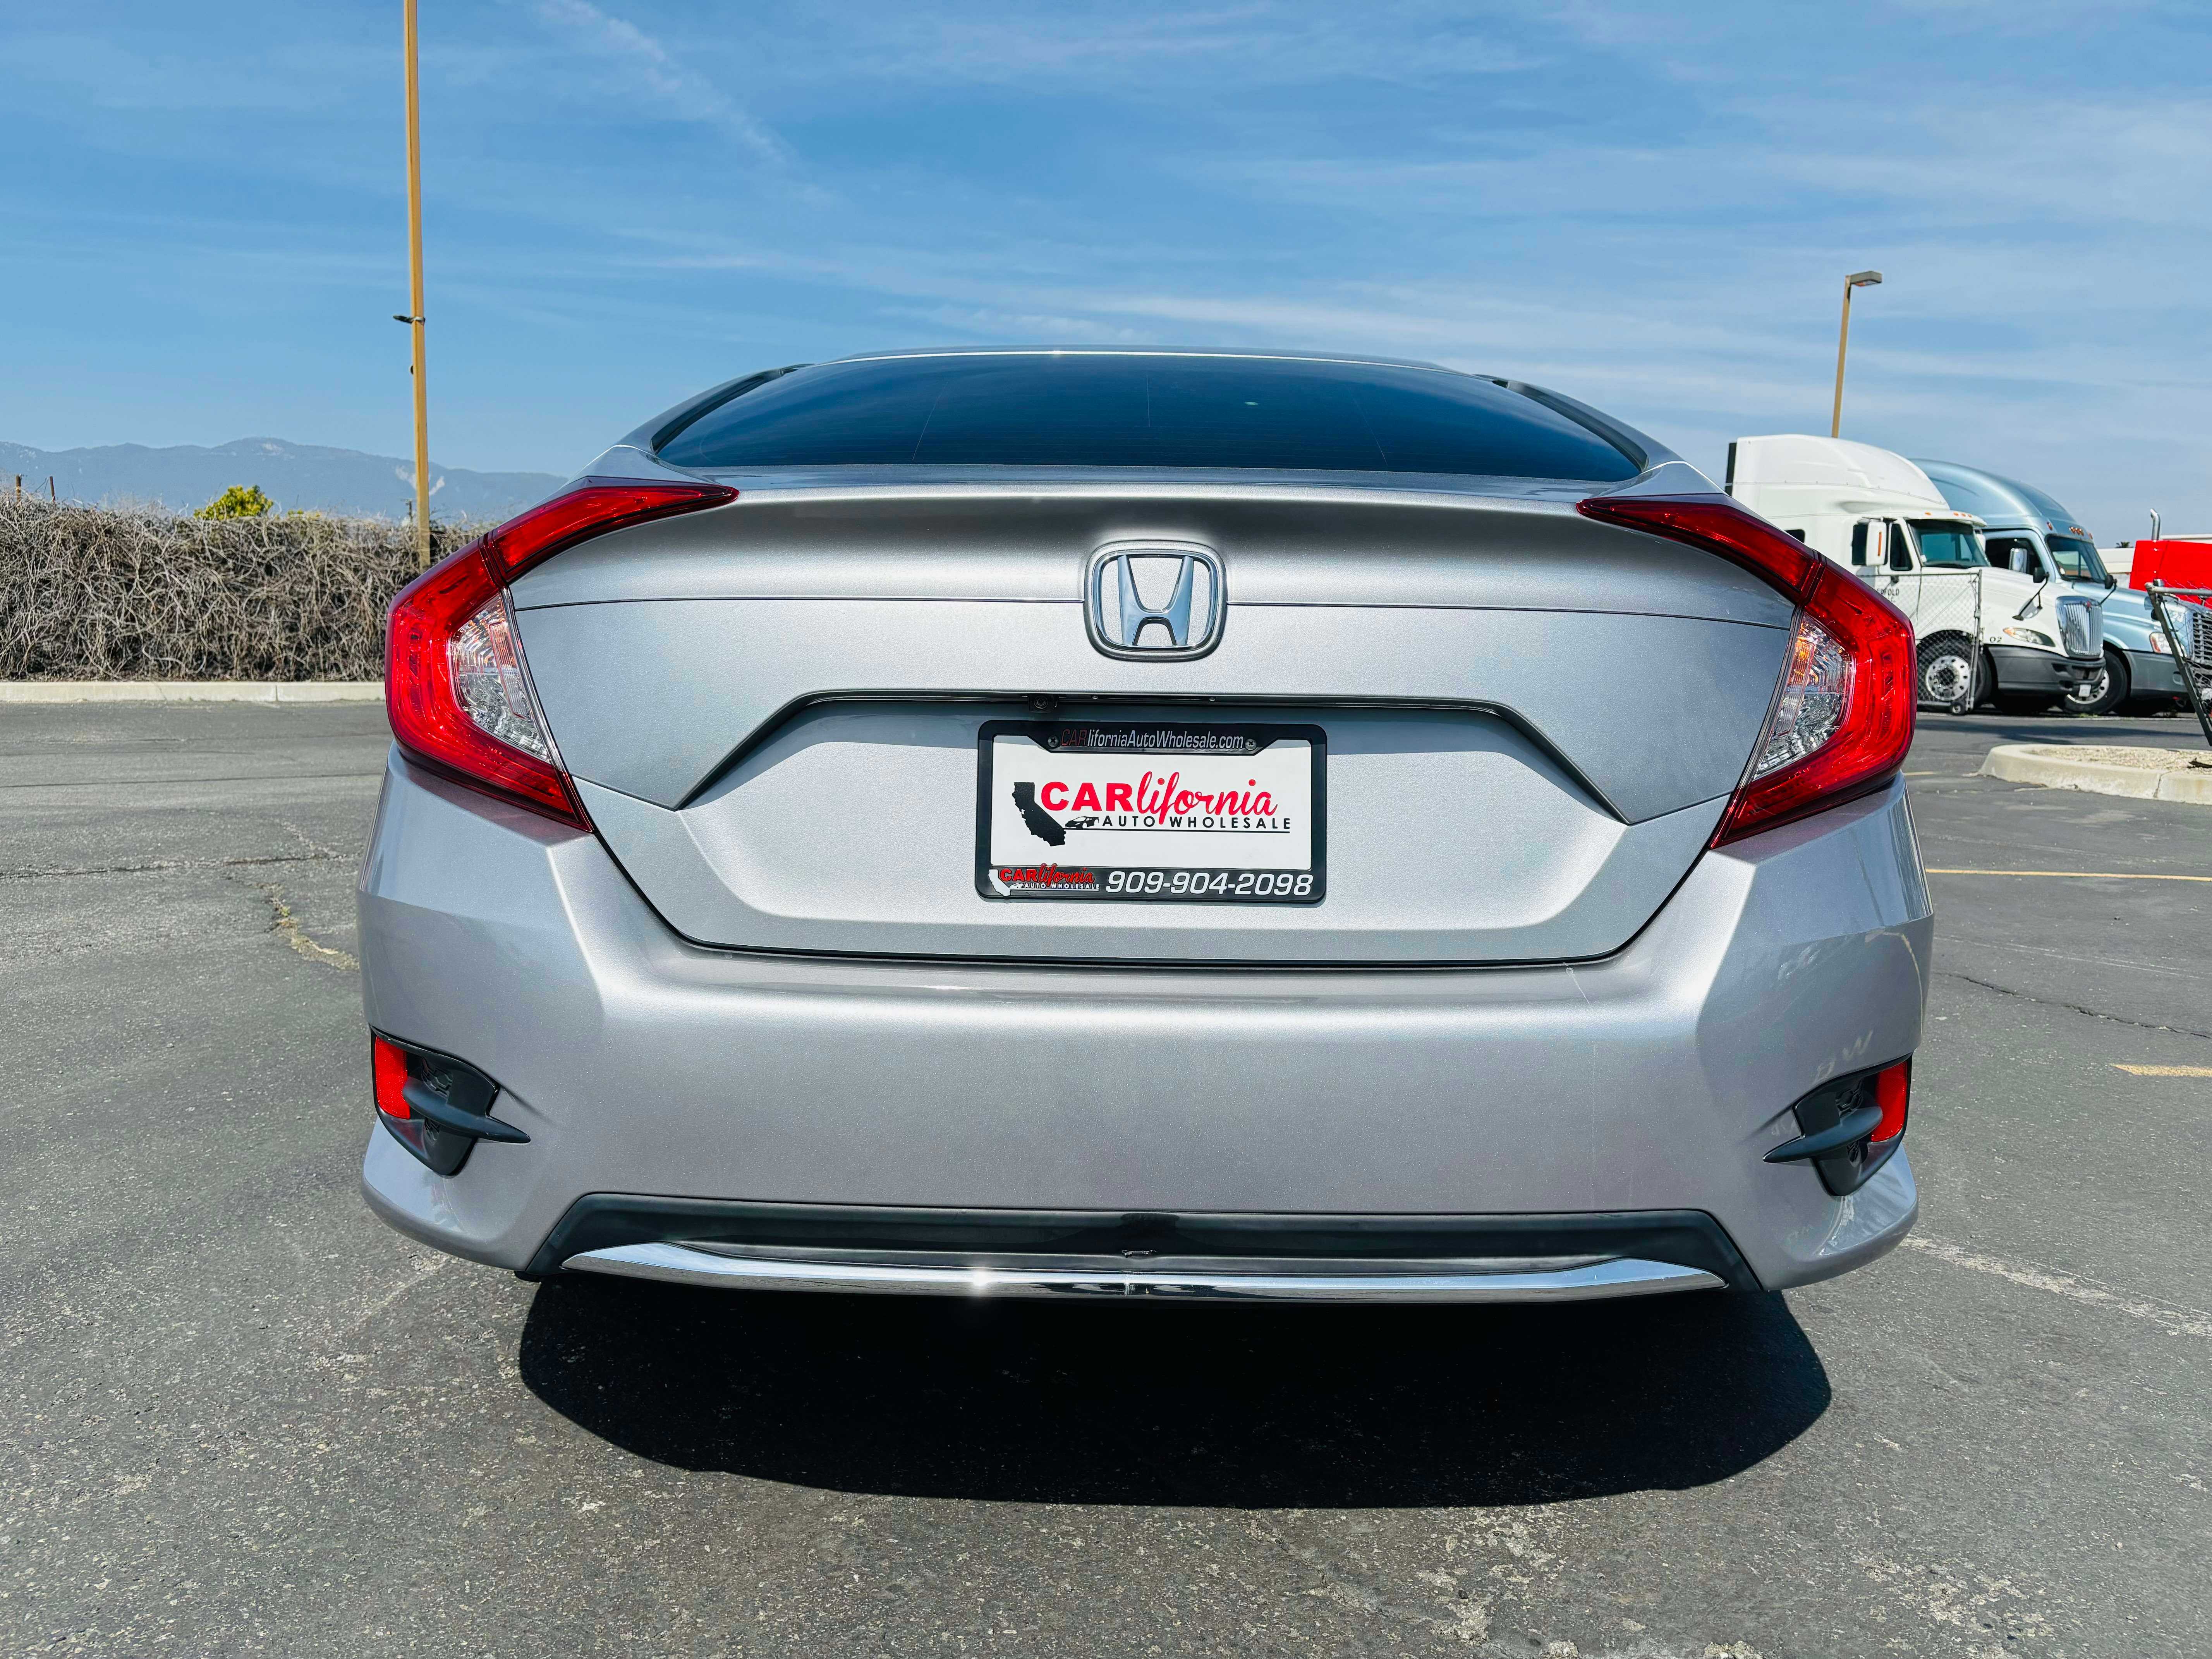 Honda Civic Image 6